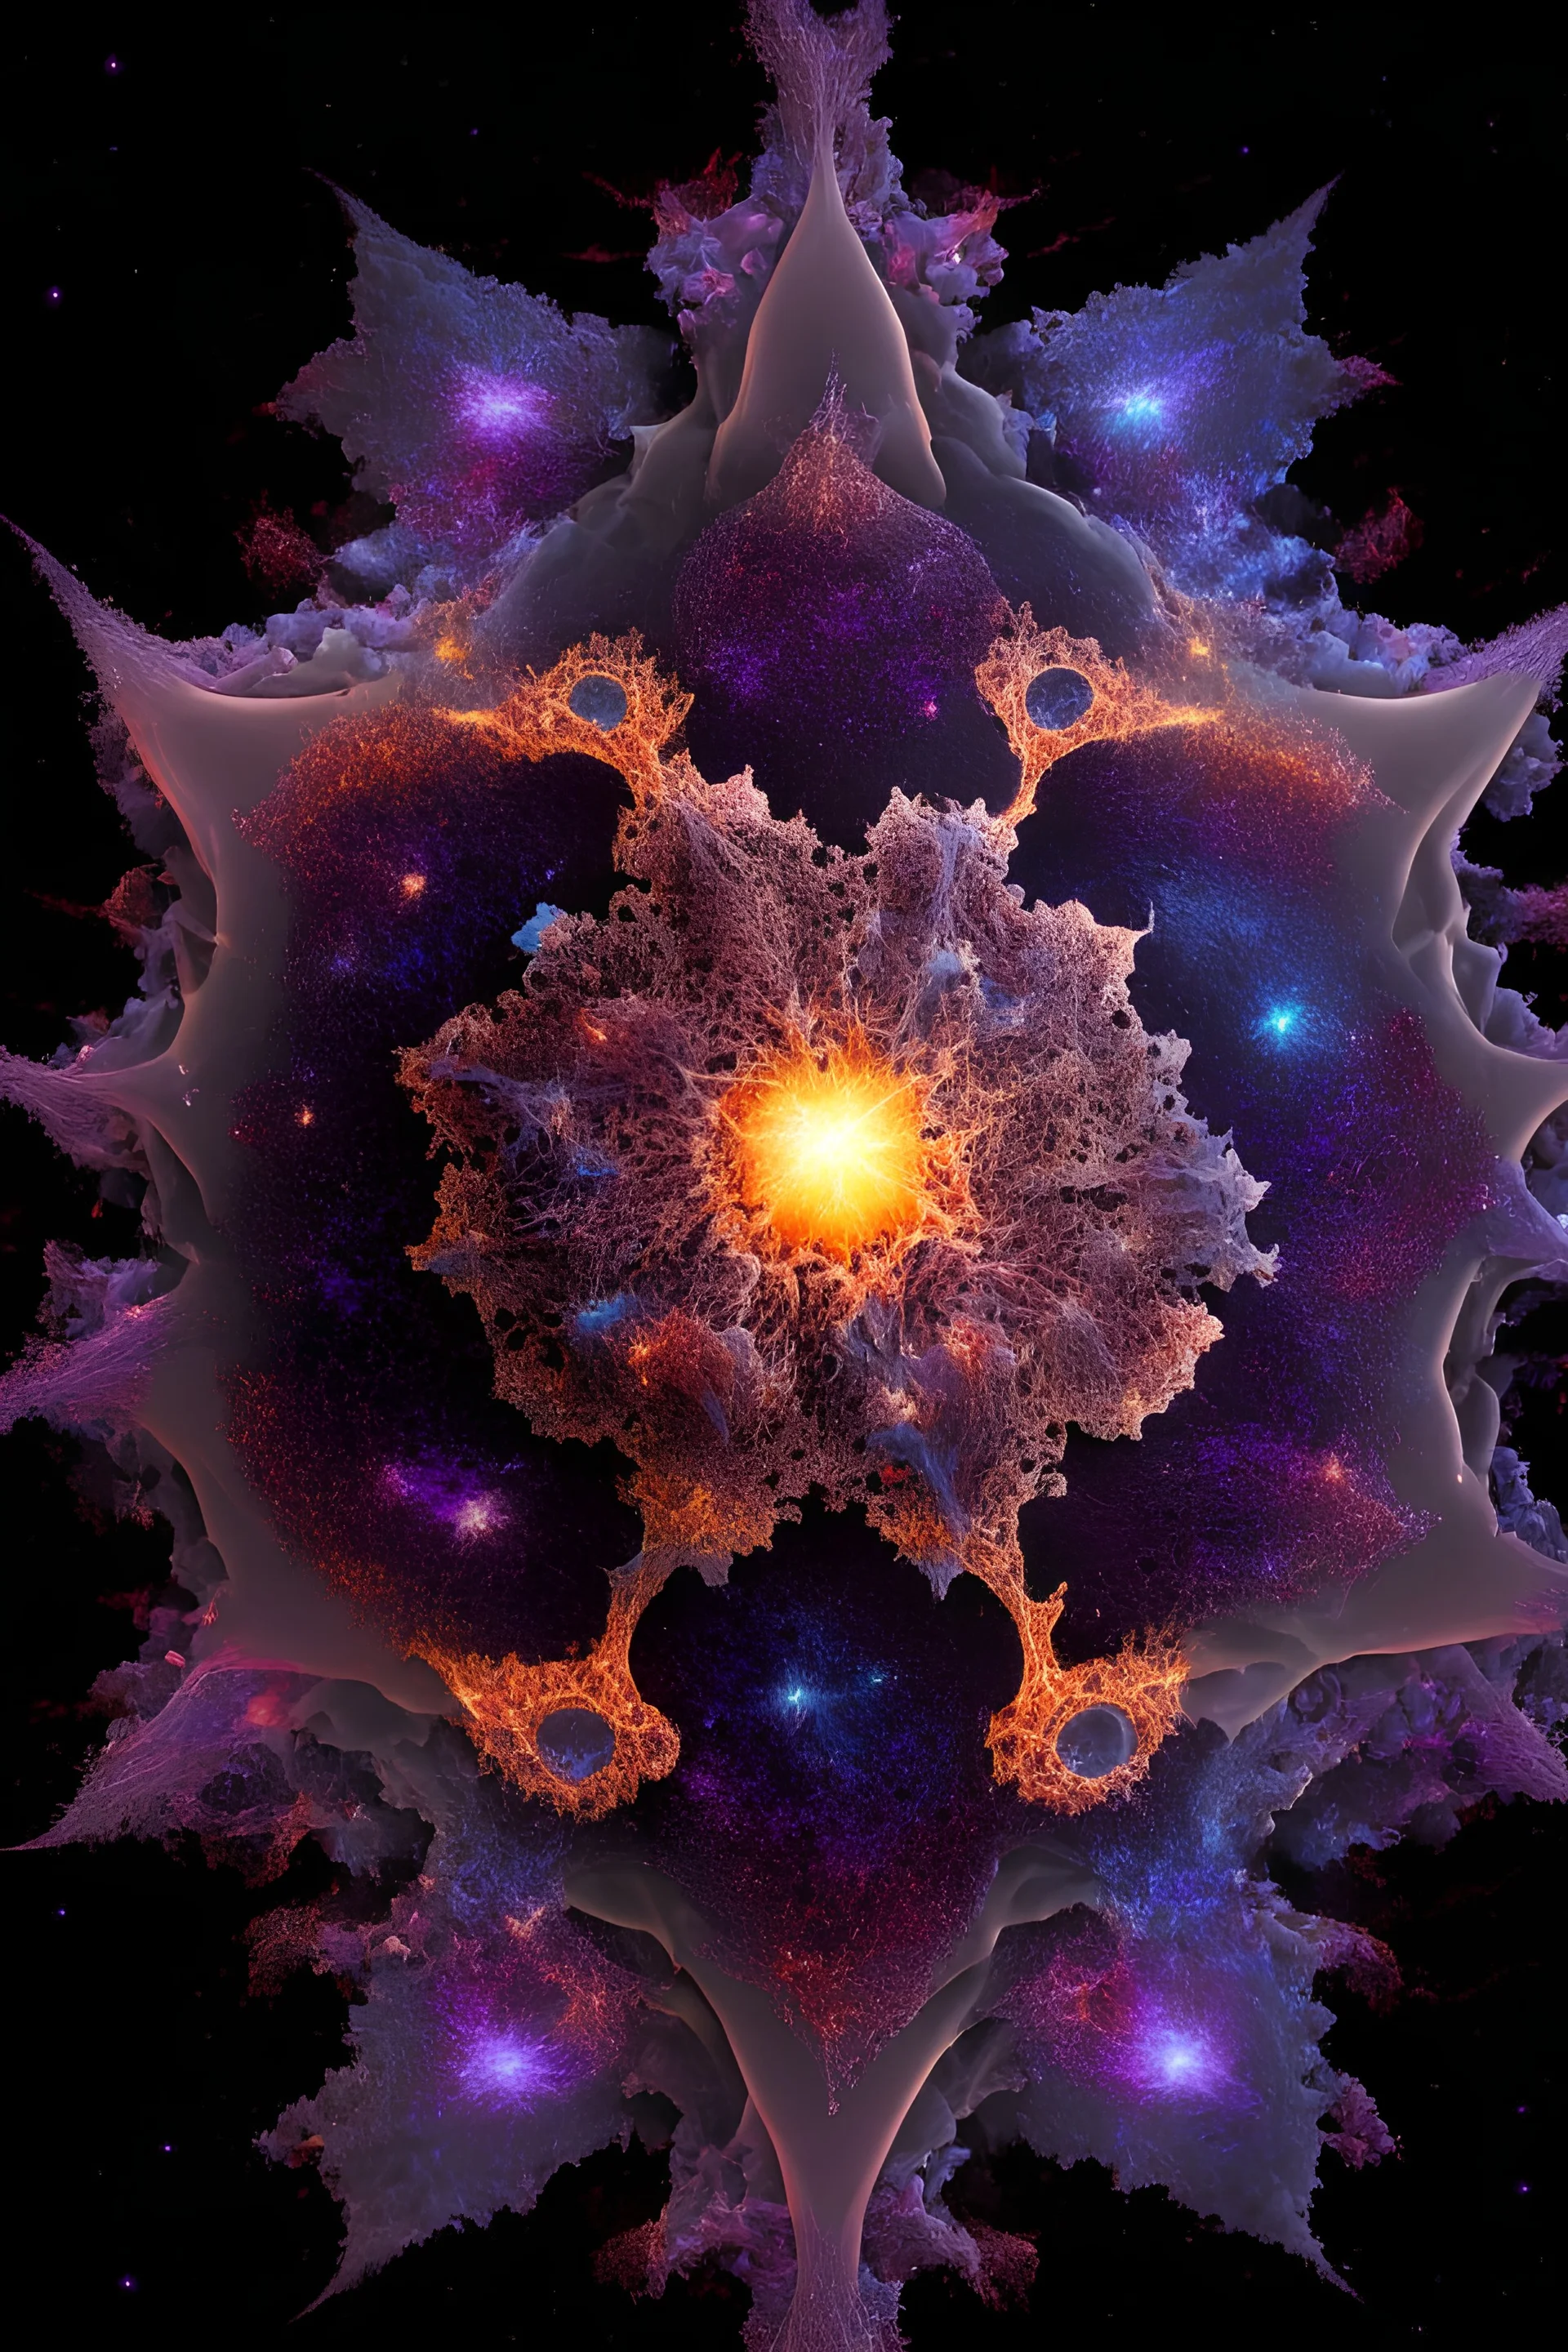 Fractal Julia 3d deep closeup exploding star deep cosmic colouring nebulas photorealistic 8k resolution symmetrical